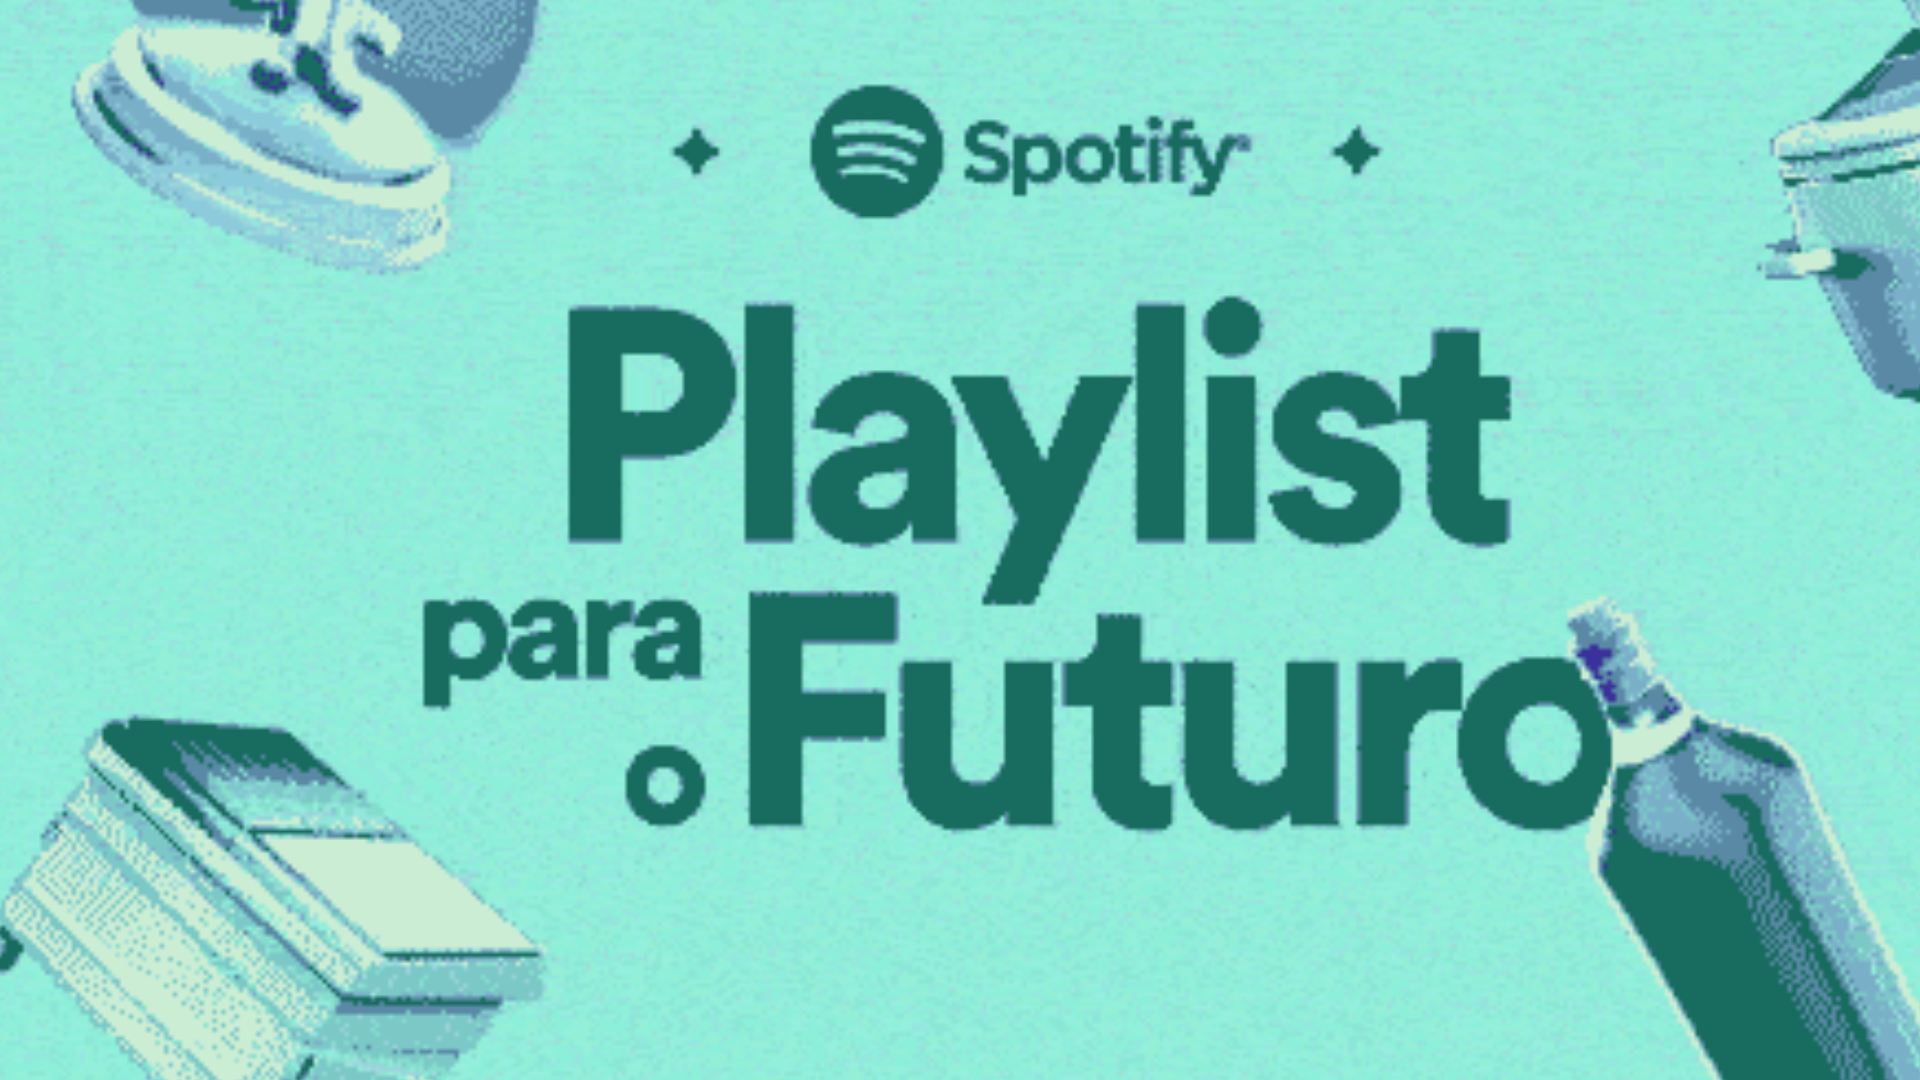 Spotify Playlist para o Futuro